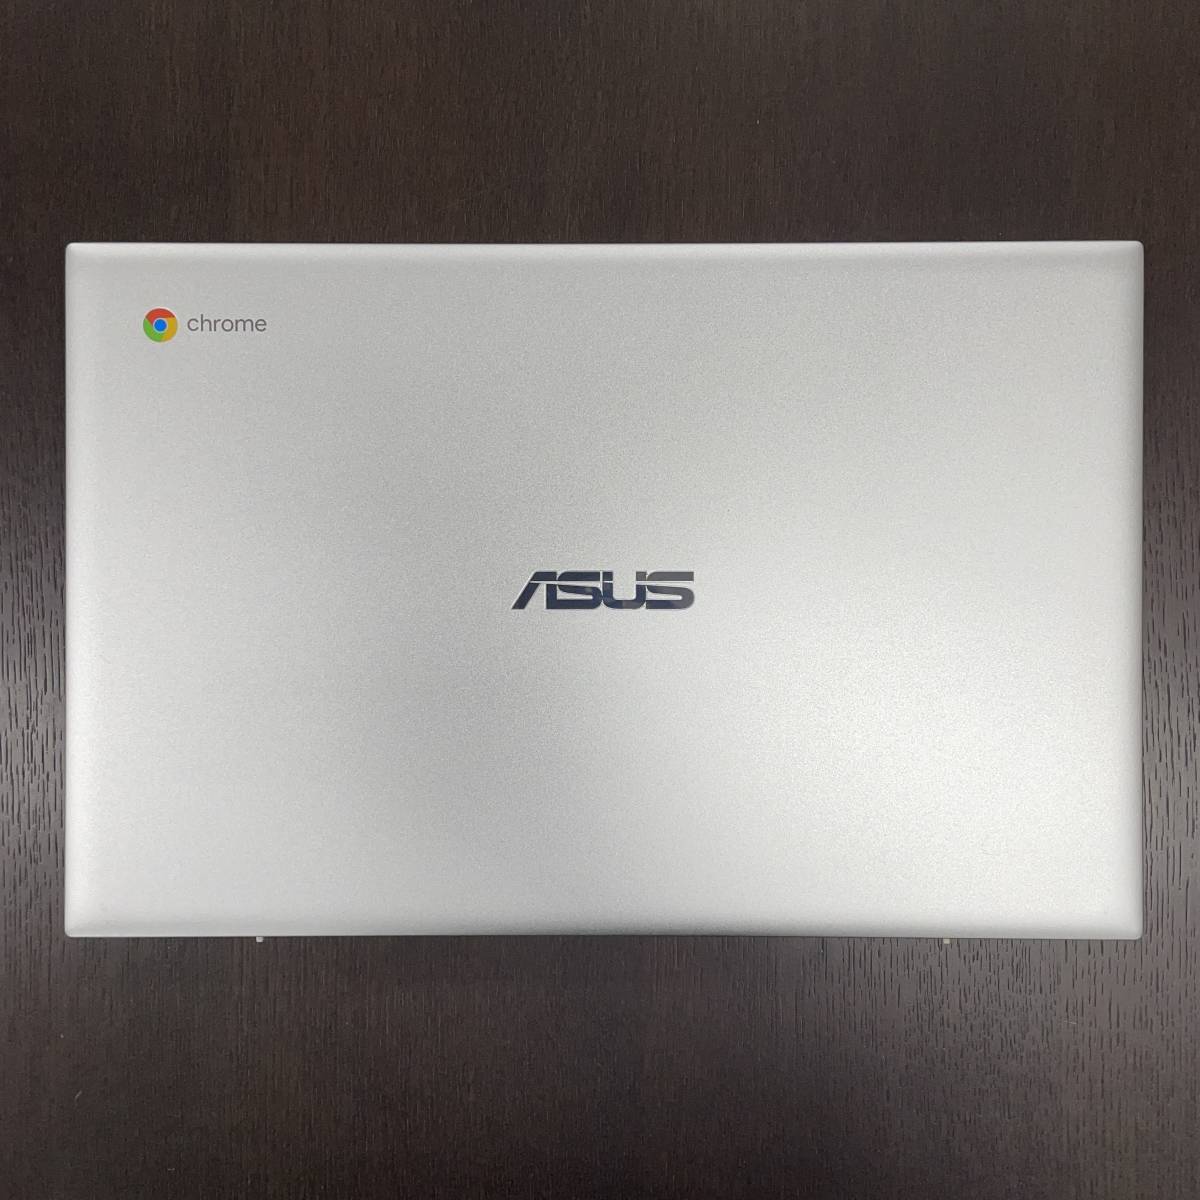 ASUS Chromebook クロームブック C425TA 14型 Core m3-8100Y 8GB eMMC 64GB タッチパネル搭載  C425TA-AJ0375